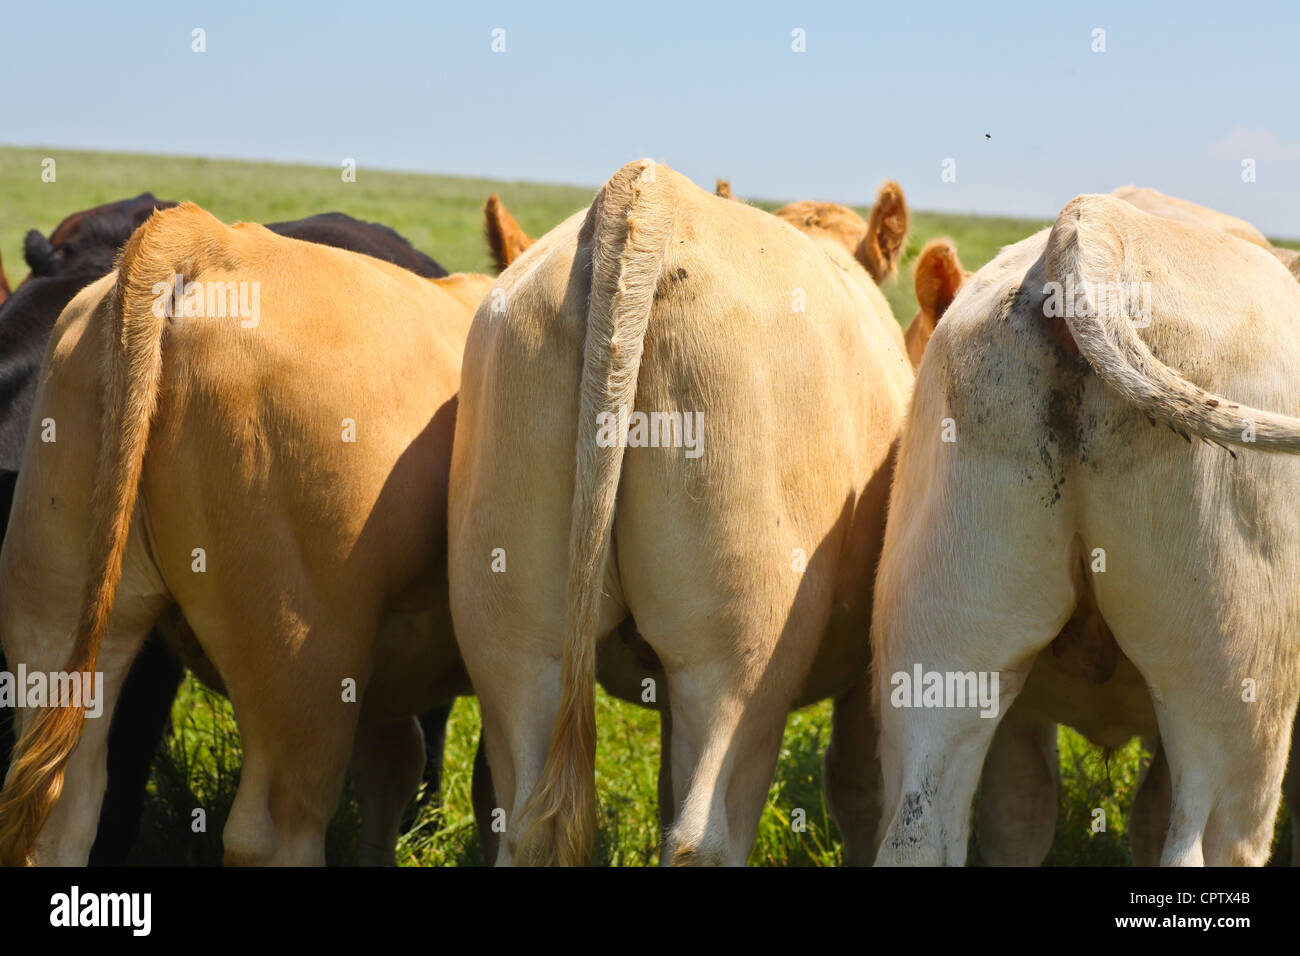 Bovine behinds arrayed in Kansas pasture Stock Photo